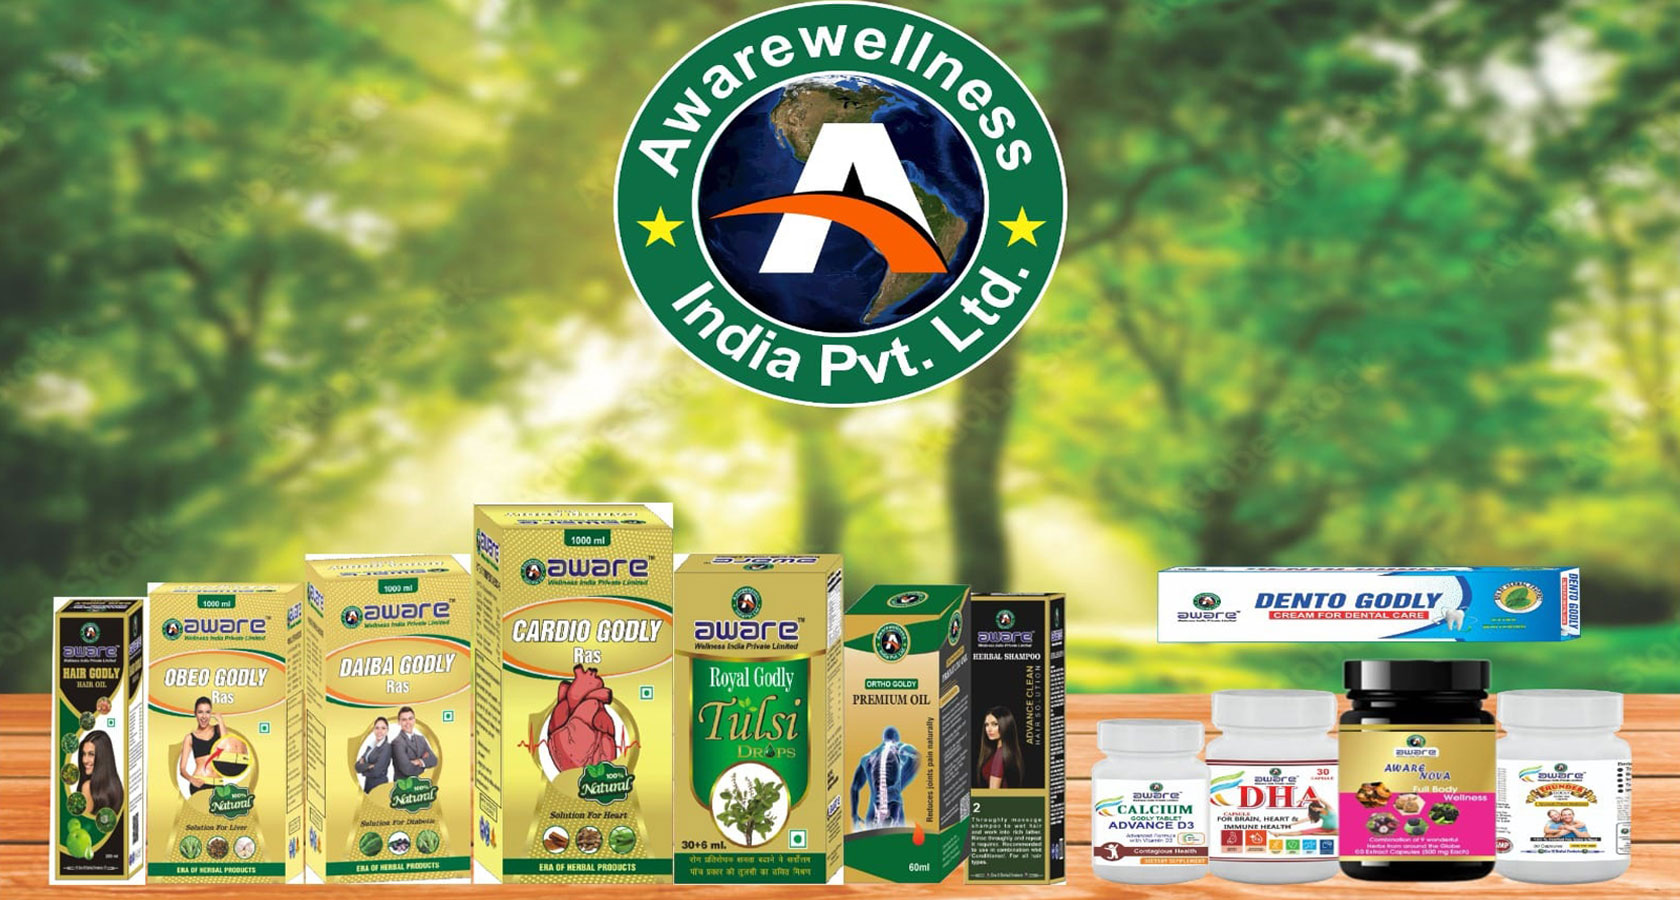 Aware Wellness India Pvt. Ltd.